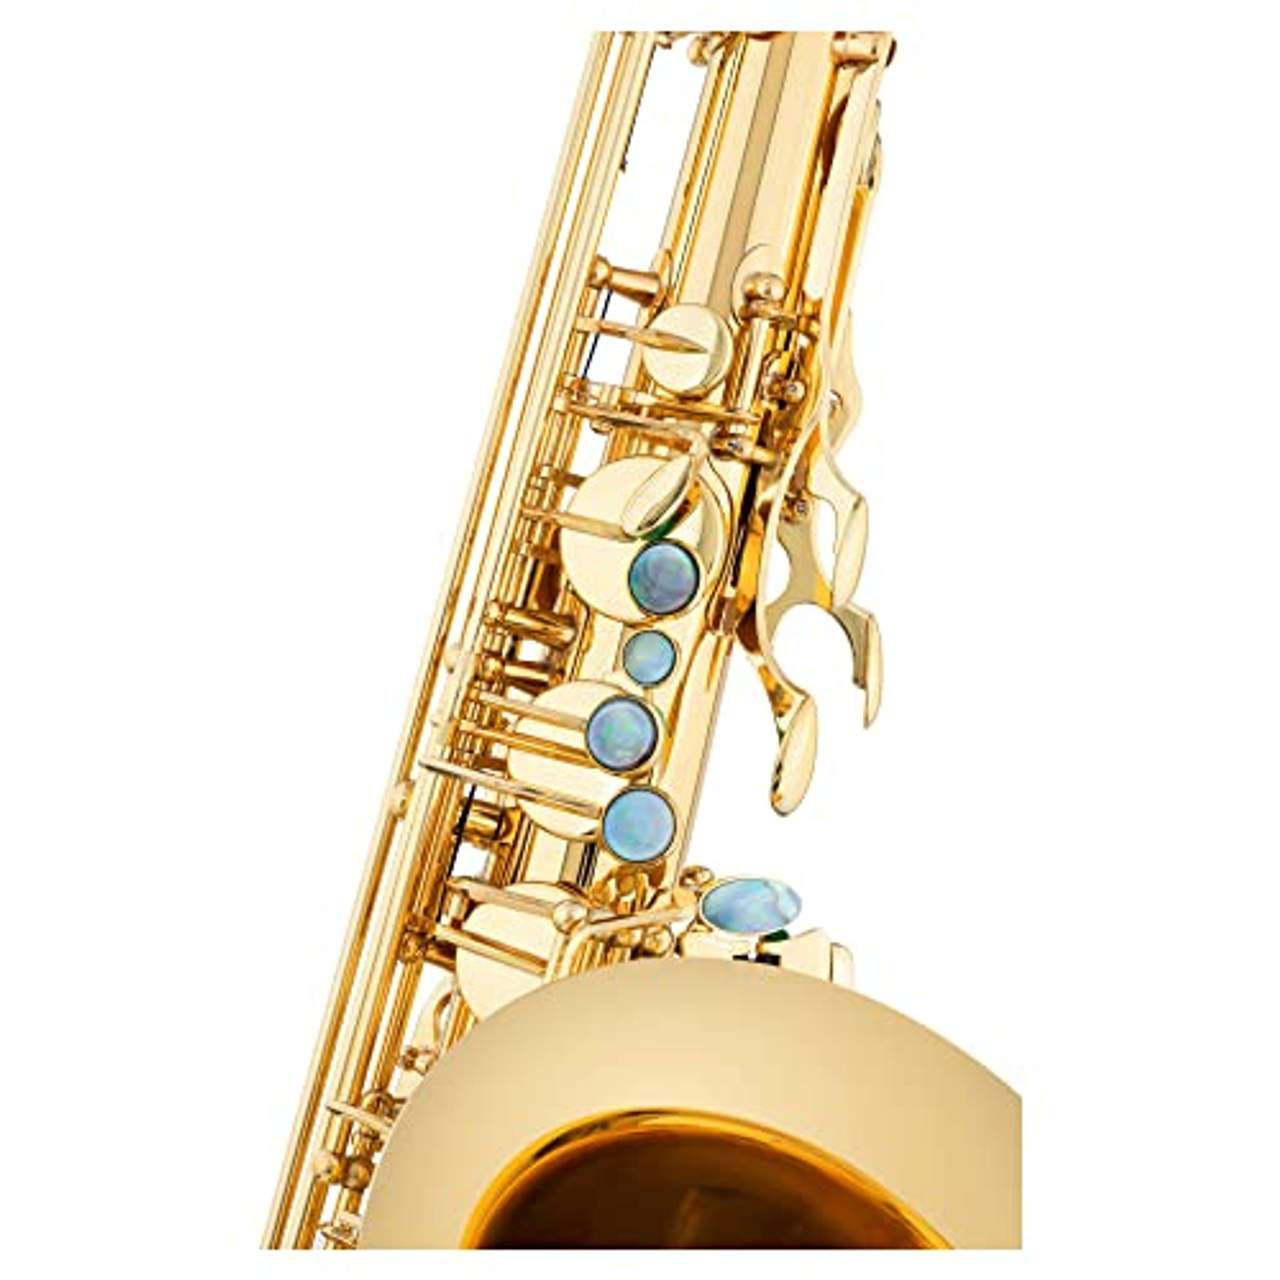 Lechgold LTS-20L Tenor-Saxophon aus lackiertem Messing